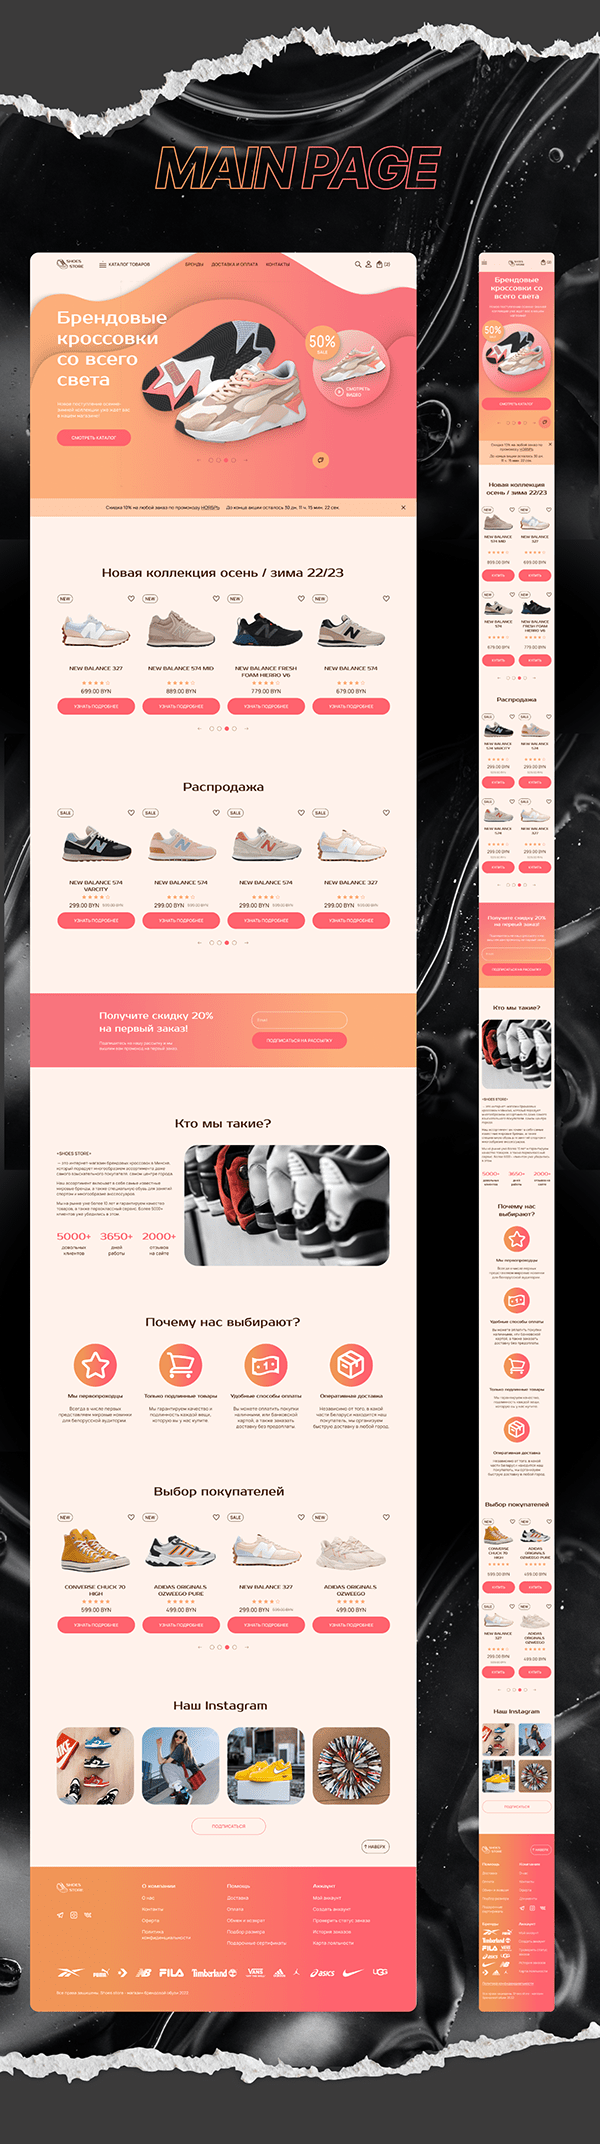 E-commerce sneaker shop ux/ui design